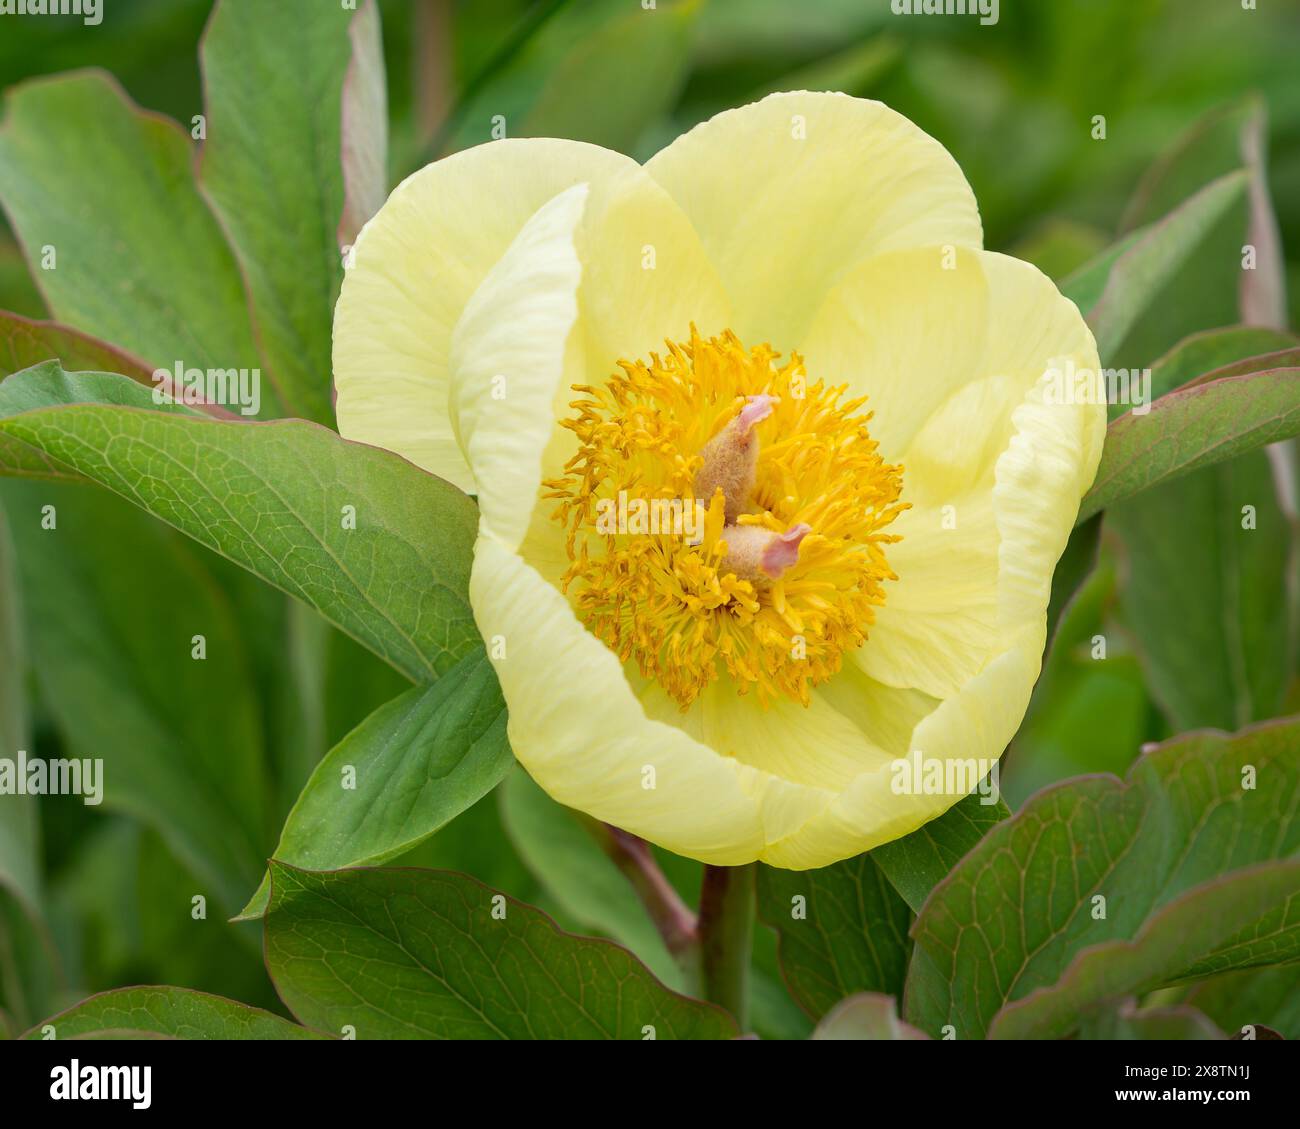 Pivoine jaune Paeonia fleur jaune en forme de bol jaune citron avec étamines jaune foncé. Fleur de Paeonia mlokosewitschii. Paeonia daurica. Banque D'Images